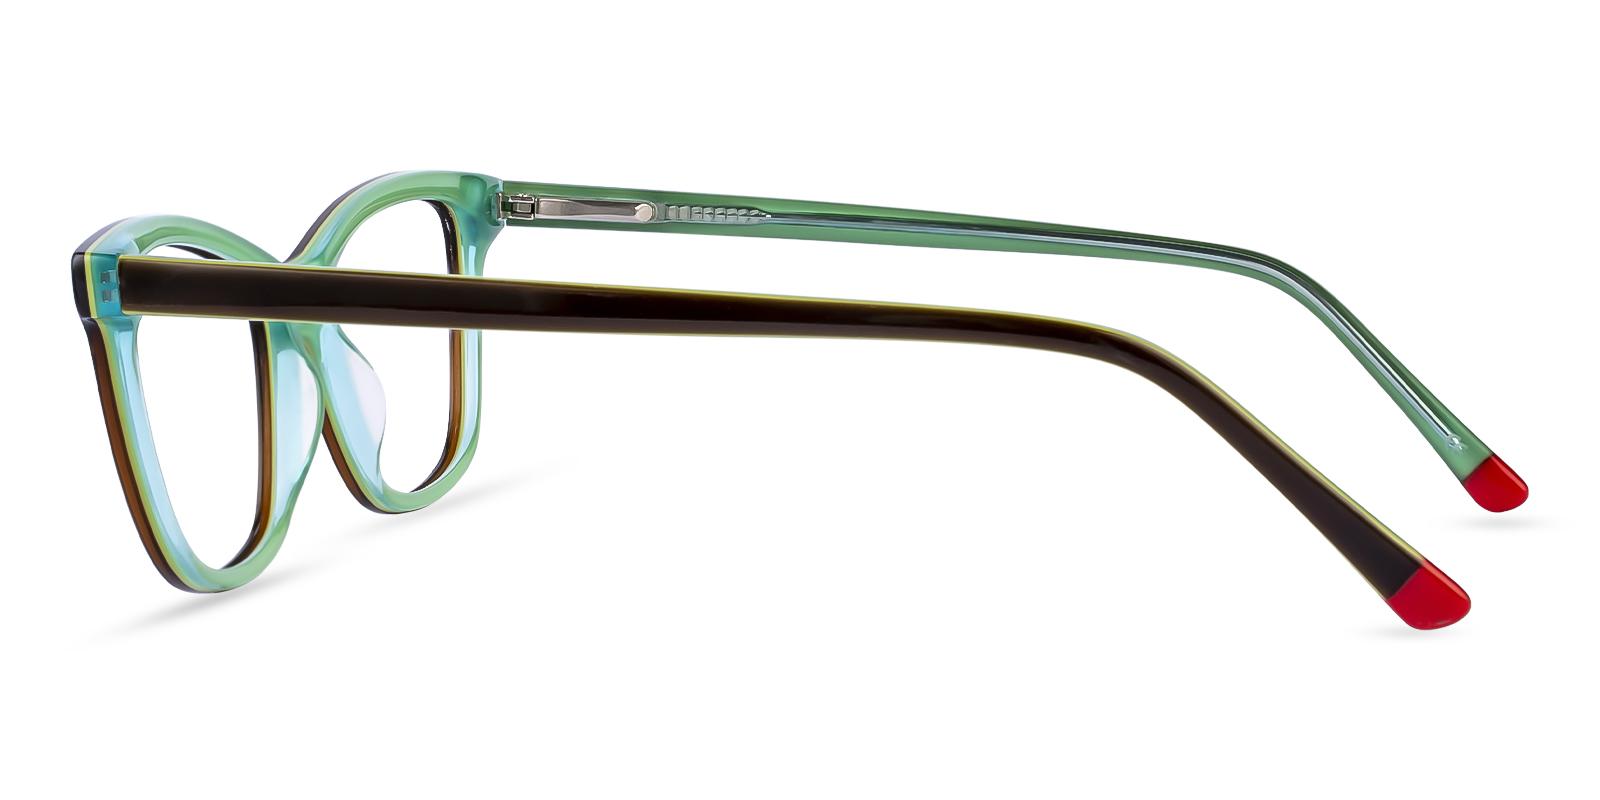 Zion Green Acetate Eyeglasses , SpringHinges , UniversalBridgeFit Frames from ABBE Glasses